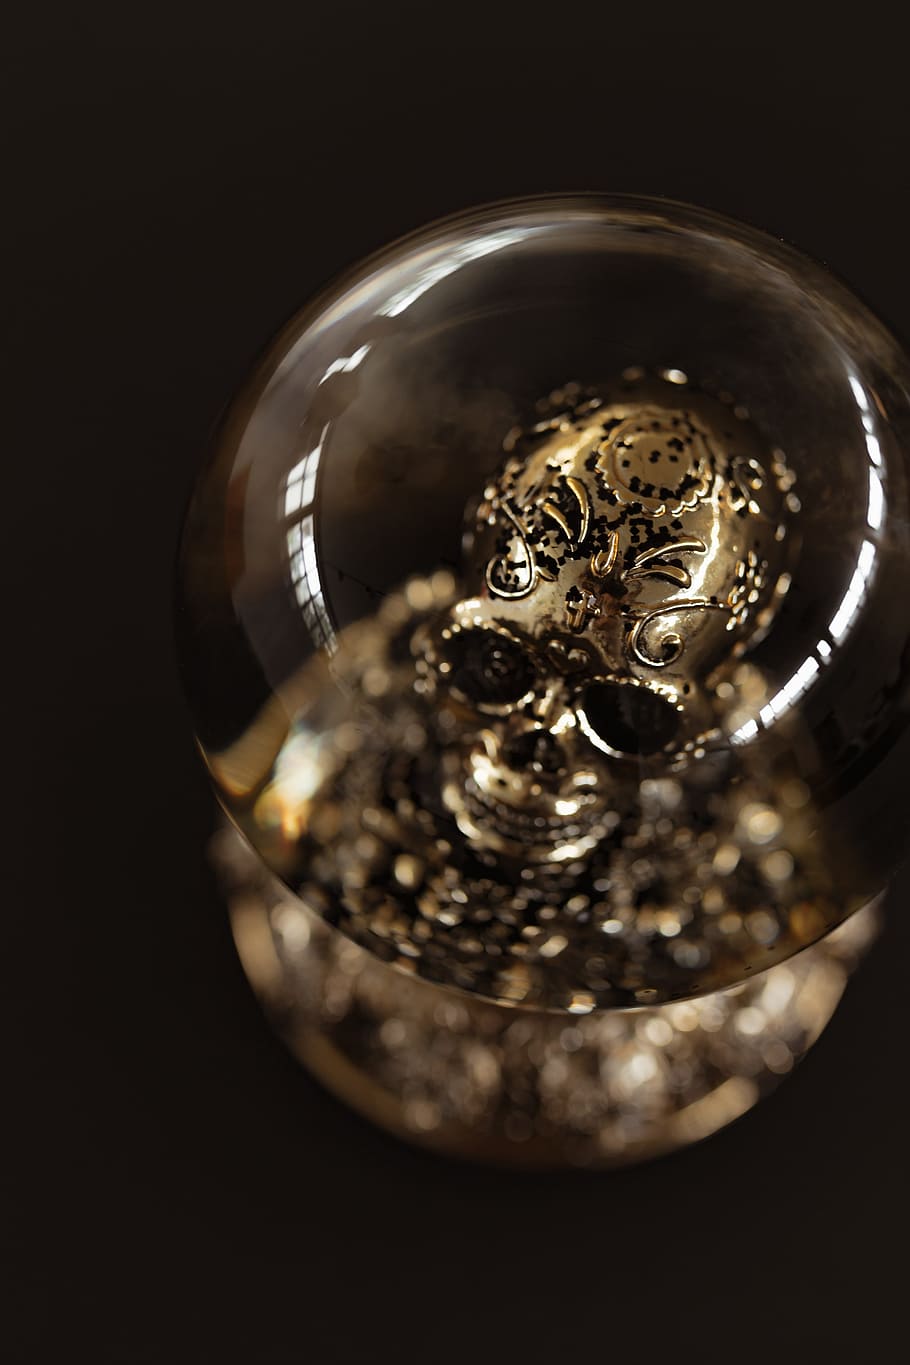 skull snow globe, gold, golden, black, decoration, skull, halloween, spooky, snow globe, indoors